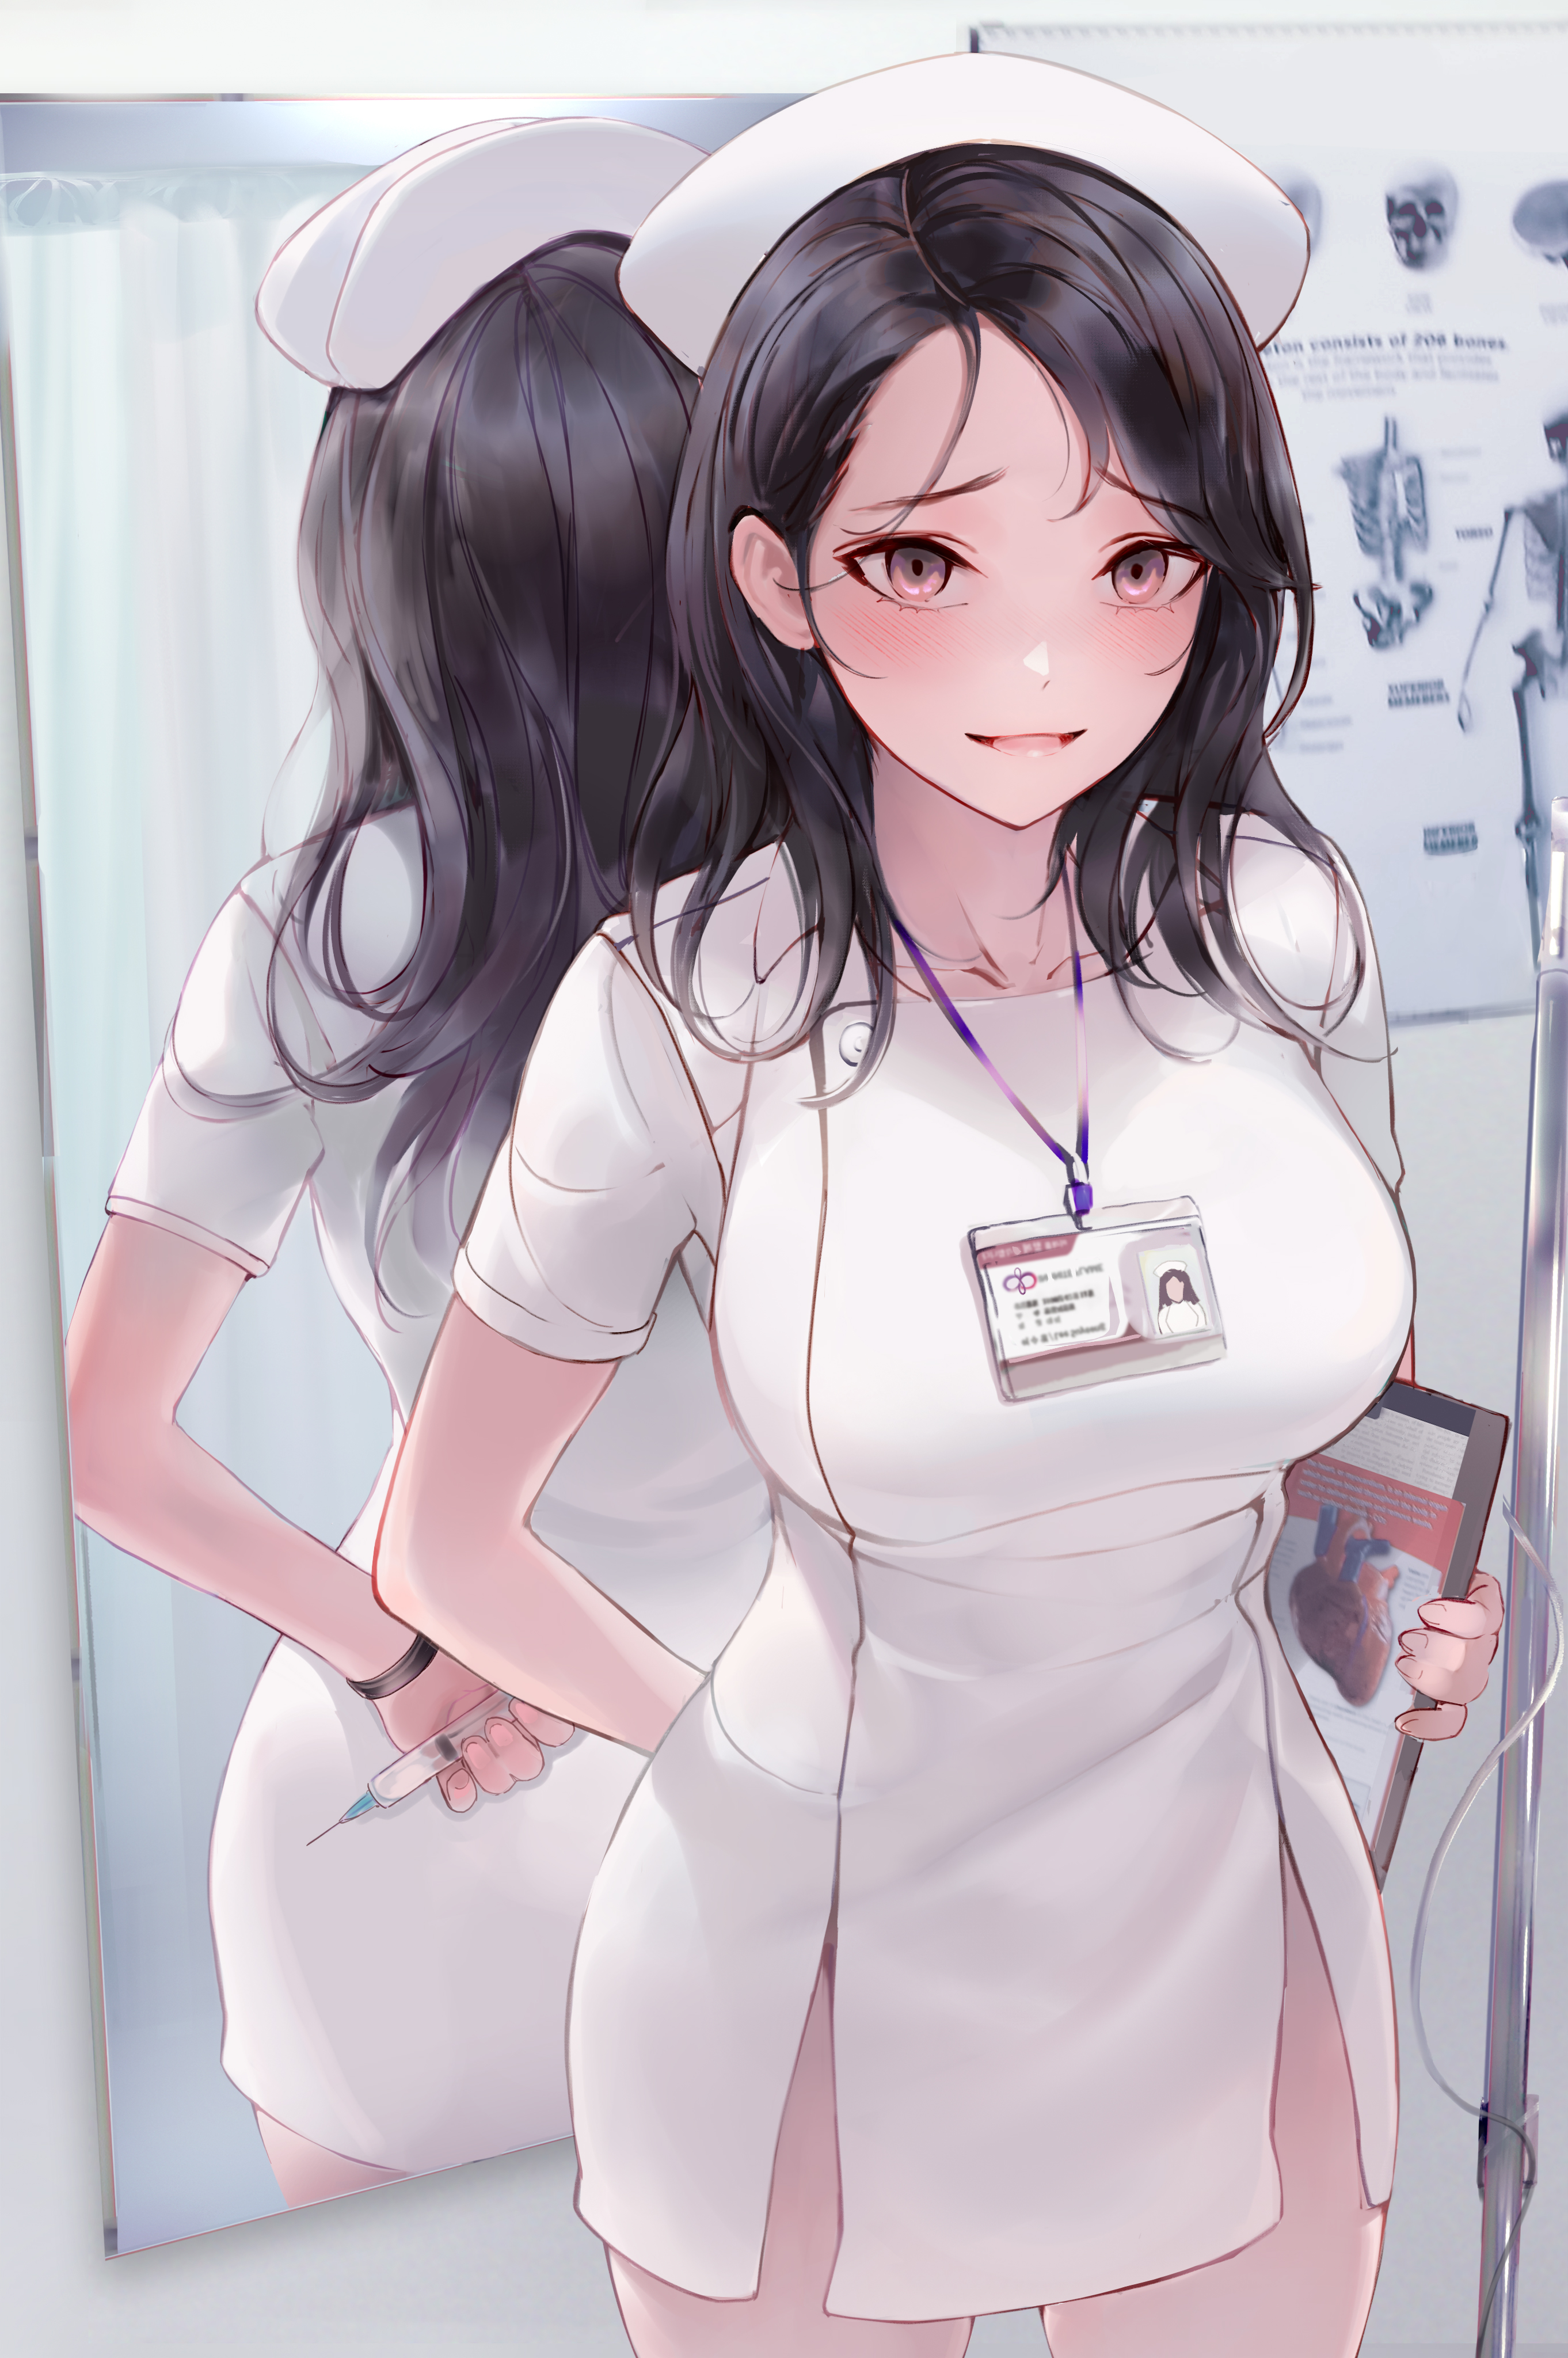 Anime 2724x4096 anime anime girls original characters nurse outfit artwork digital art fan art nurses chowbie thighs smiling blushing mirror reflection black hair syringe headdress